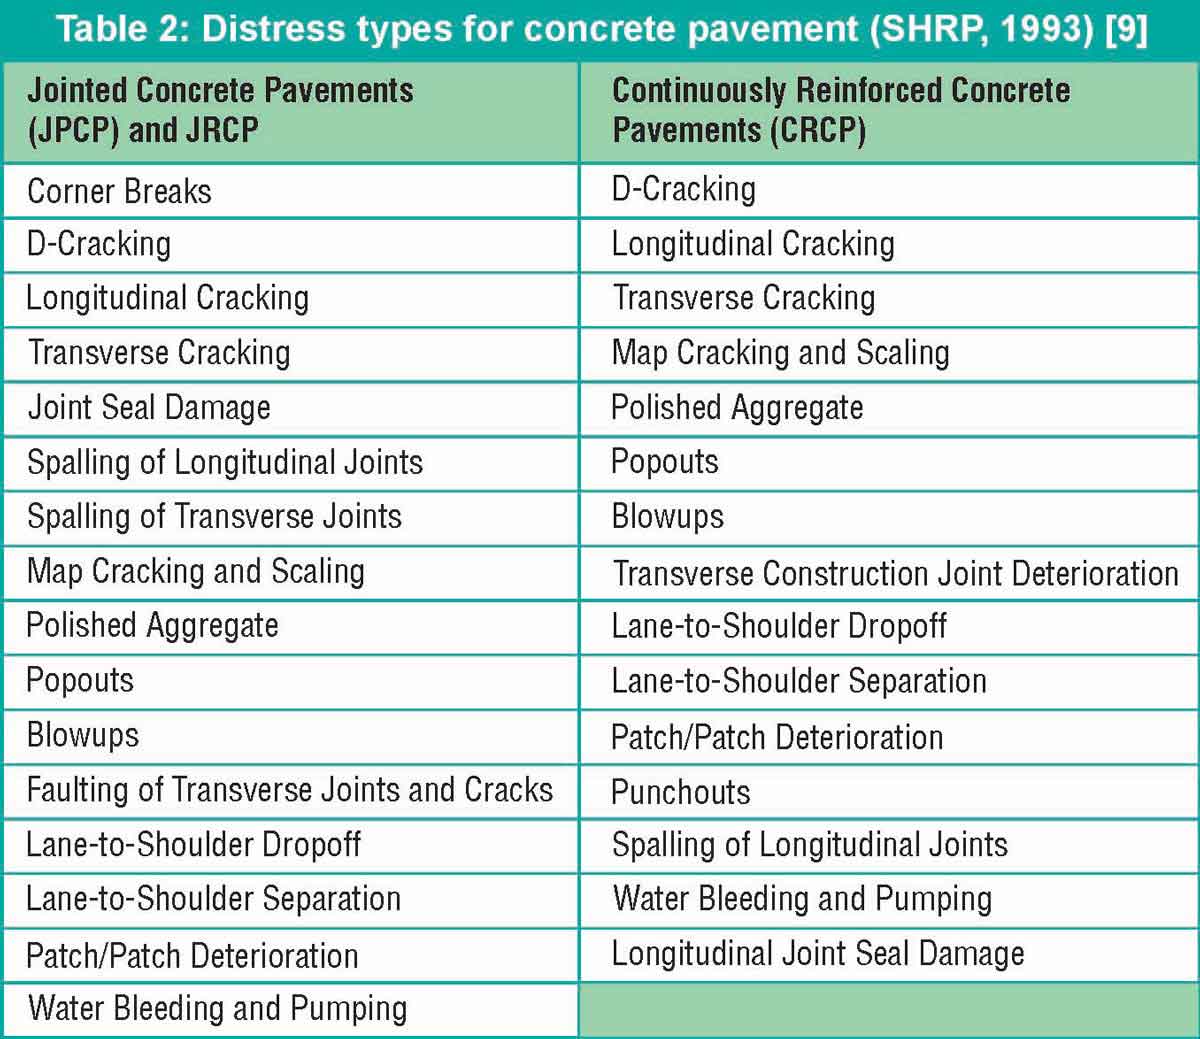 Distress types for concrete pavement (SHRP, 1993)